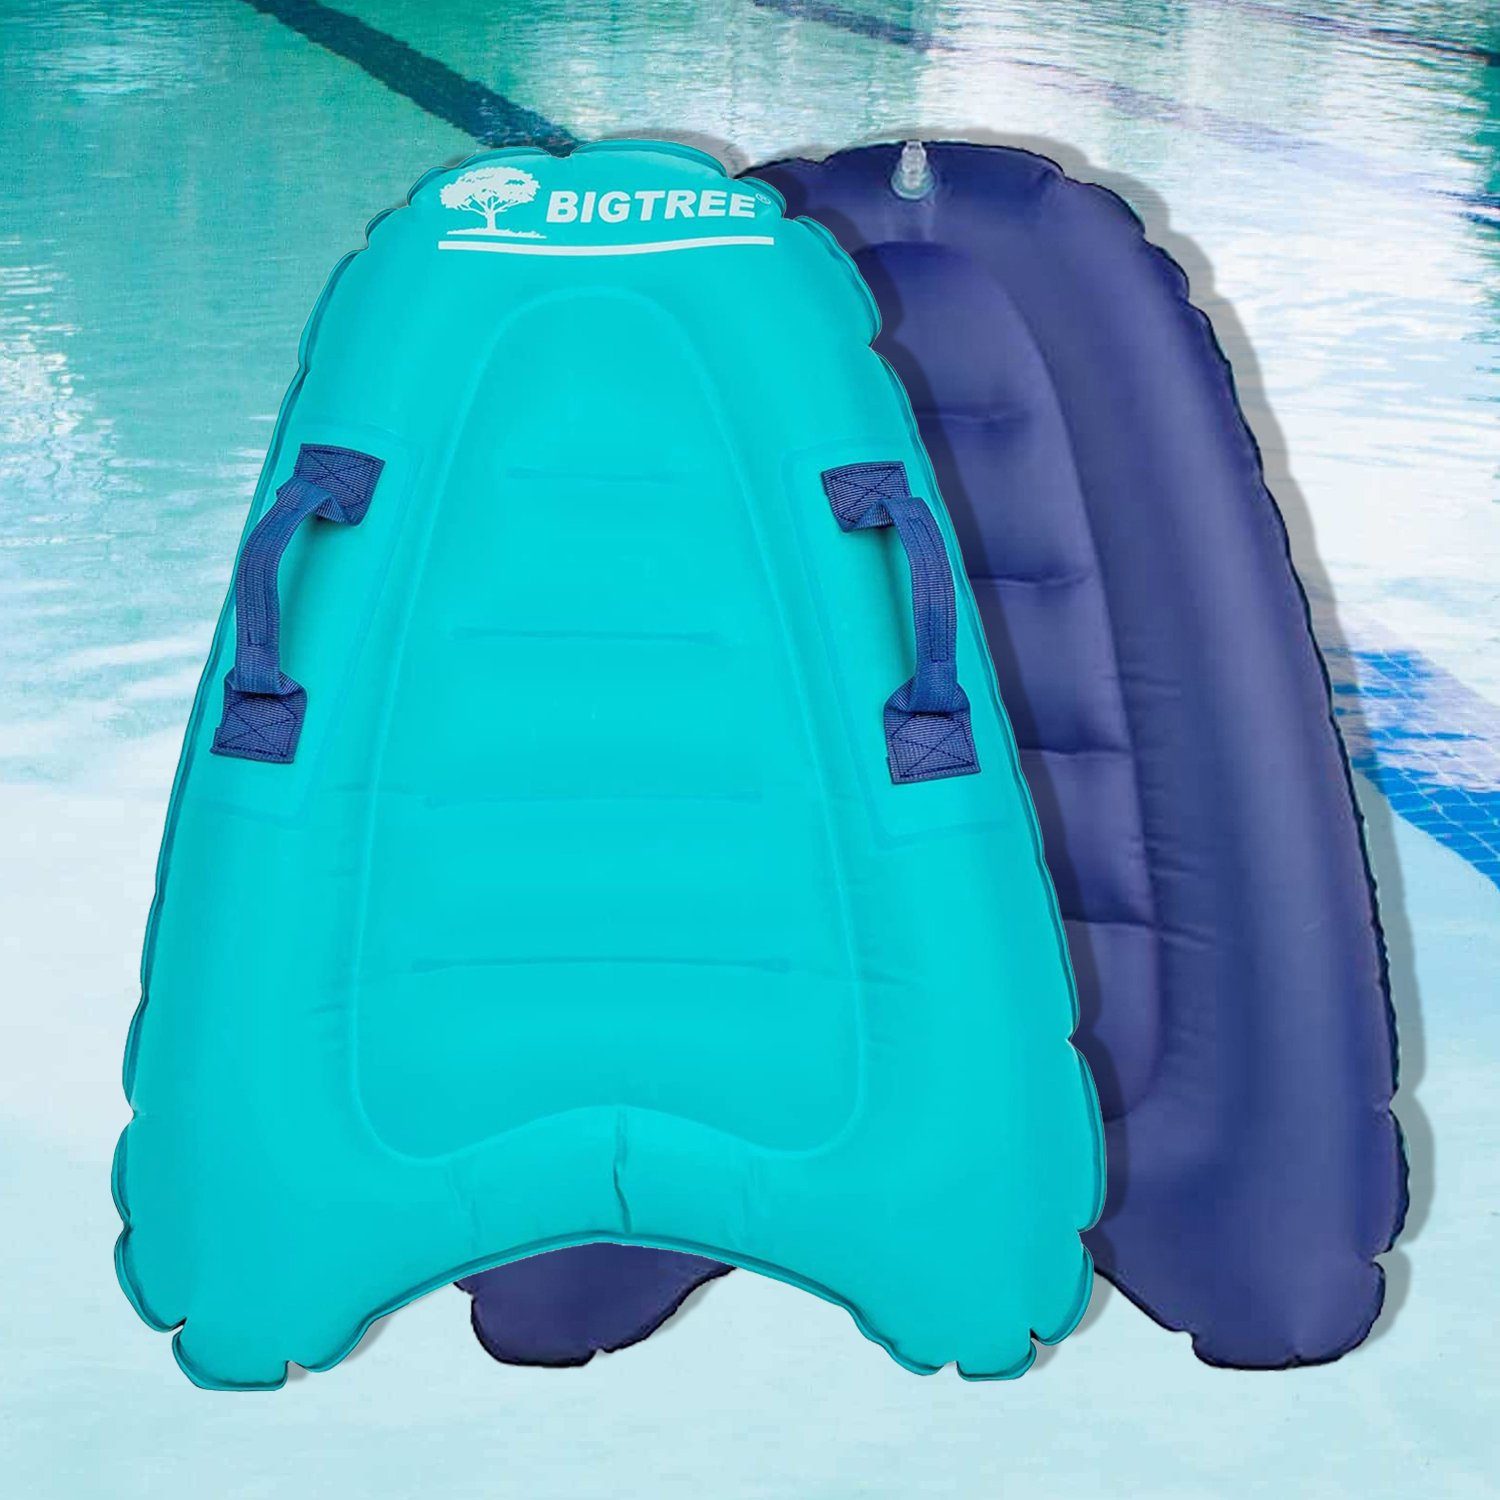 KAHOO Inflatable SUP-Board Aufblasbares Bodyboard, 52x14x70cm, Schwimmhilfe Pure